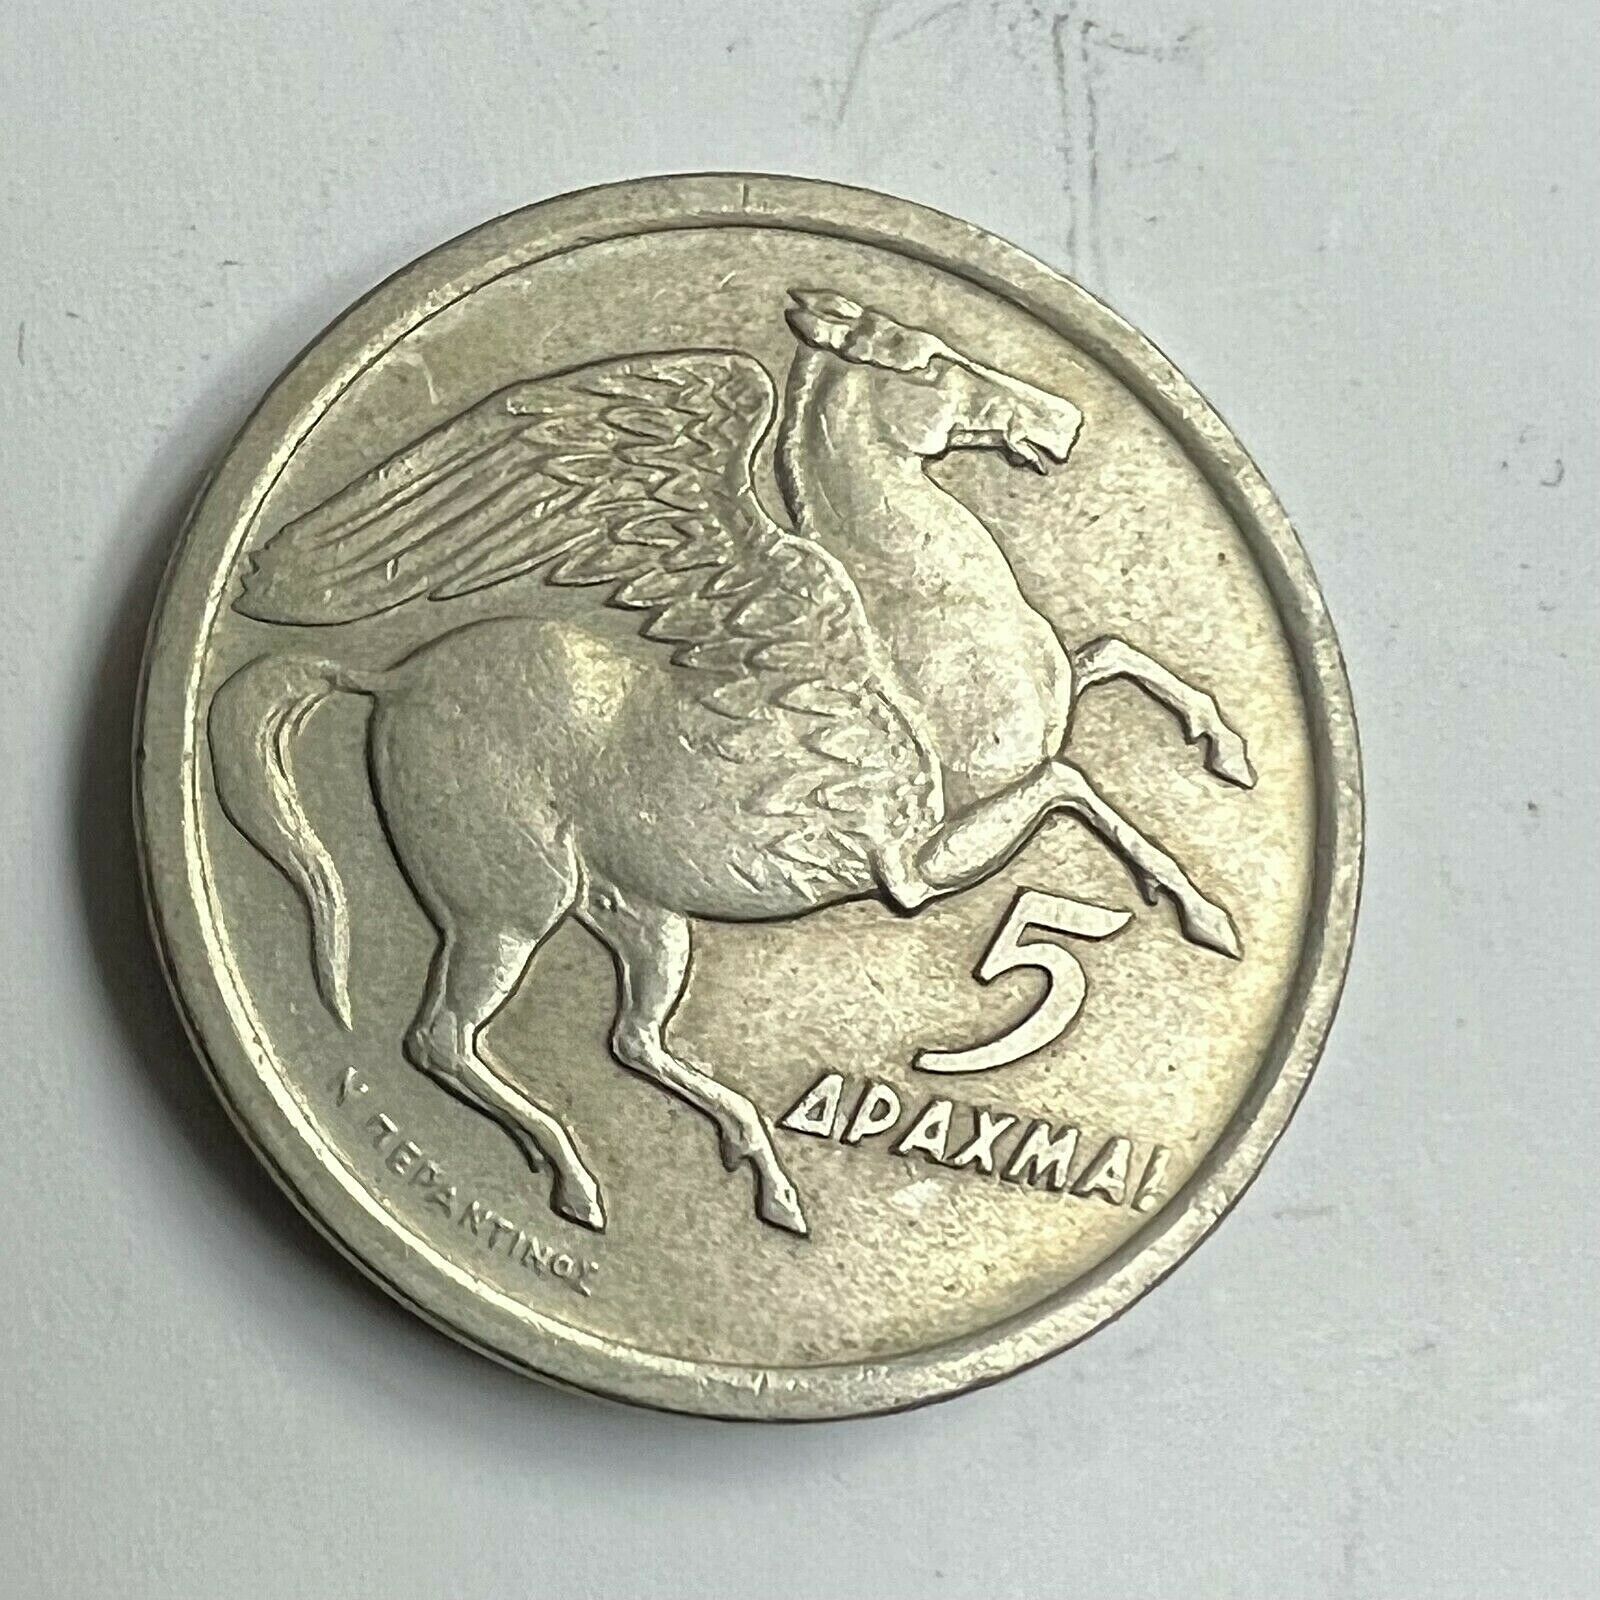 Phoenix (currency) - Wikipedia